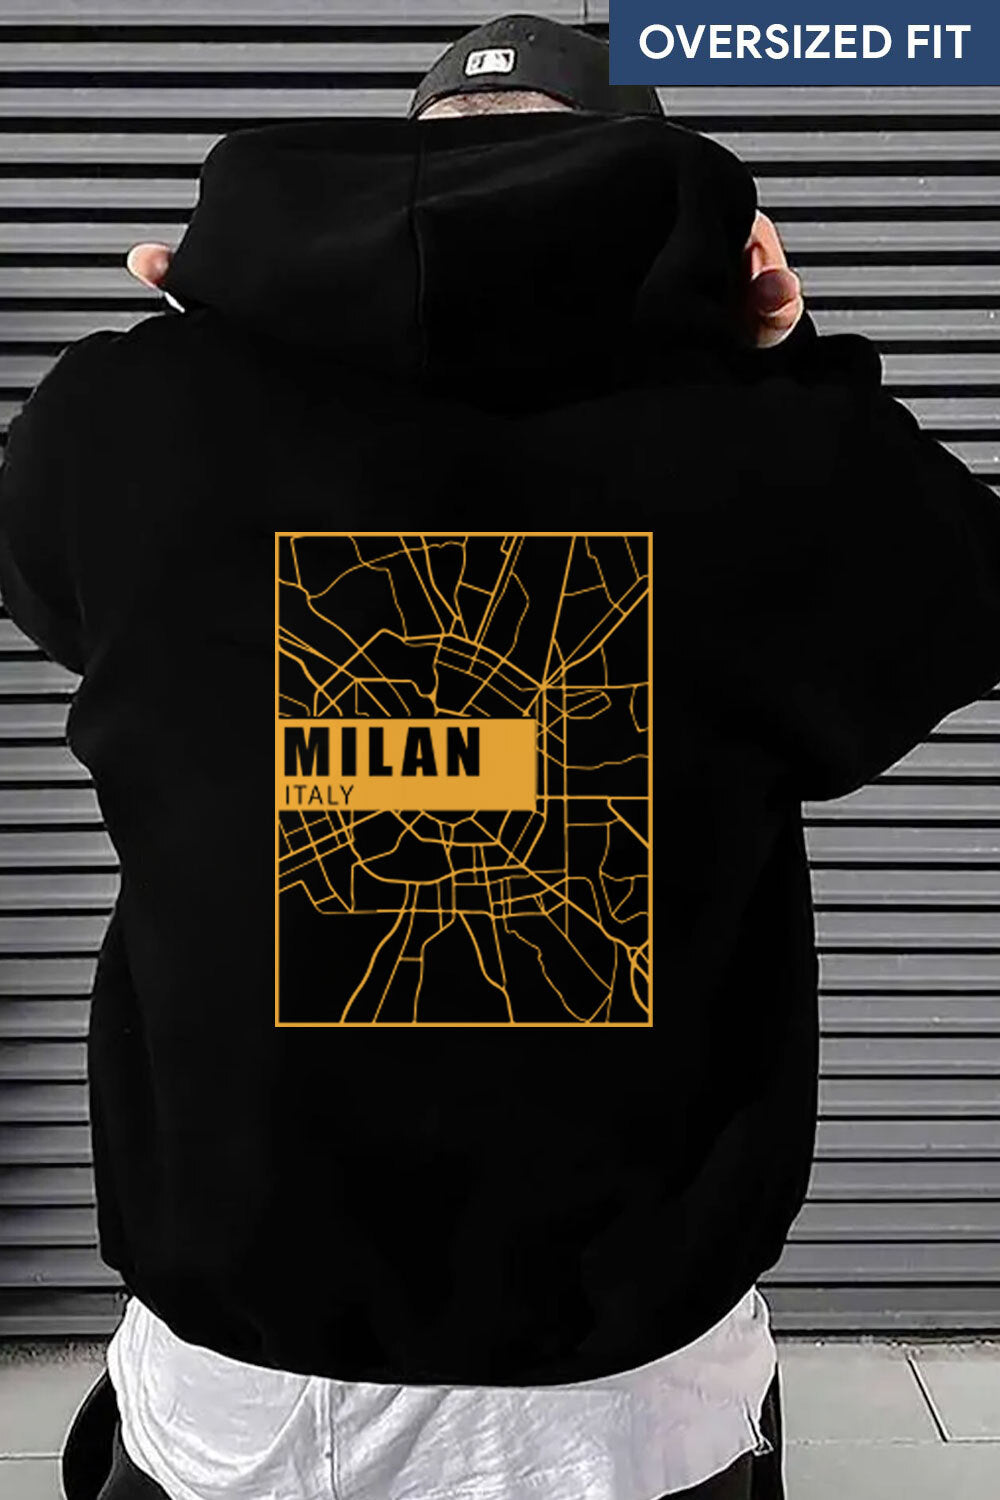 Milan Graphic (Oversized)